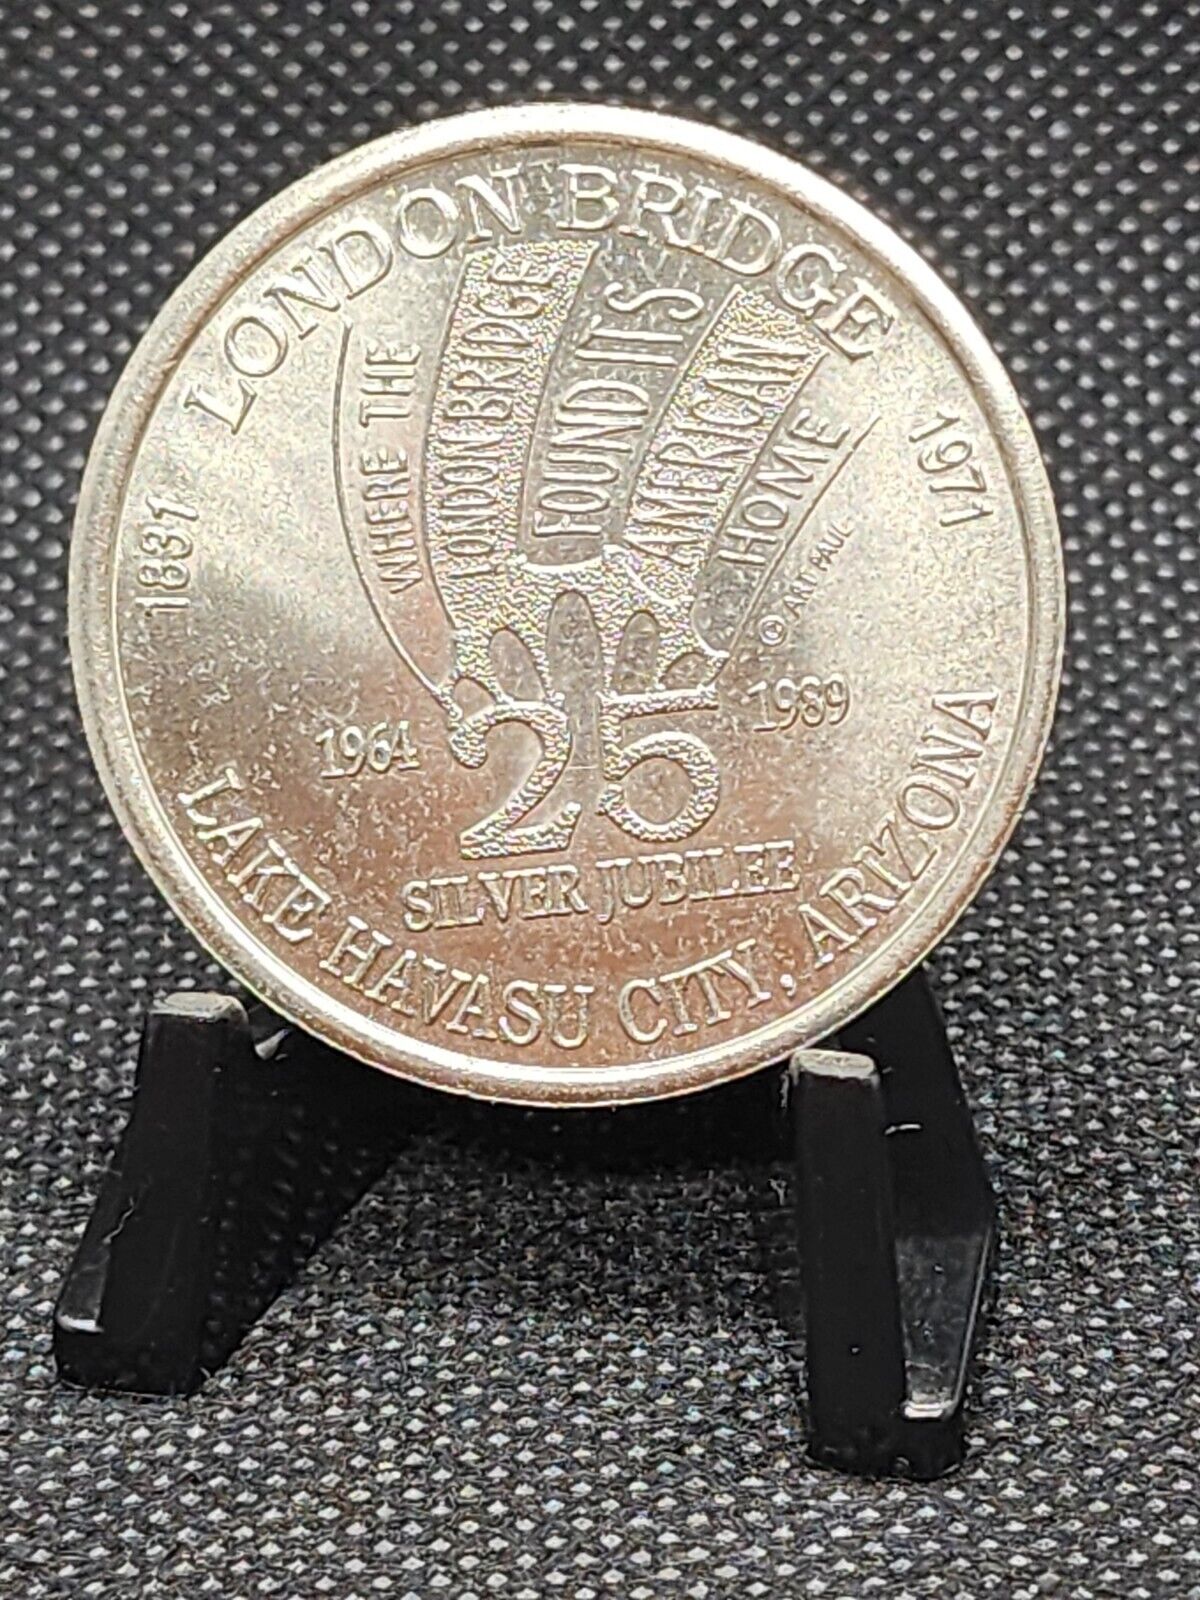 1989-90 London Bridge Coin Silver #19 Lake Havasu City, Arizona Rotary Club 